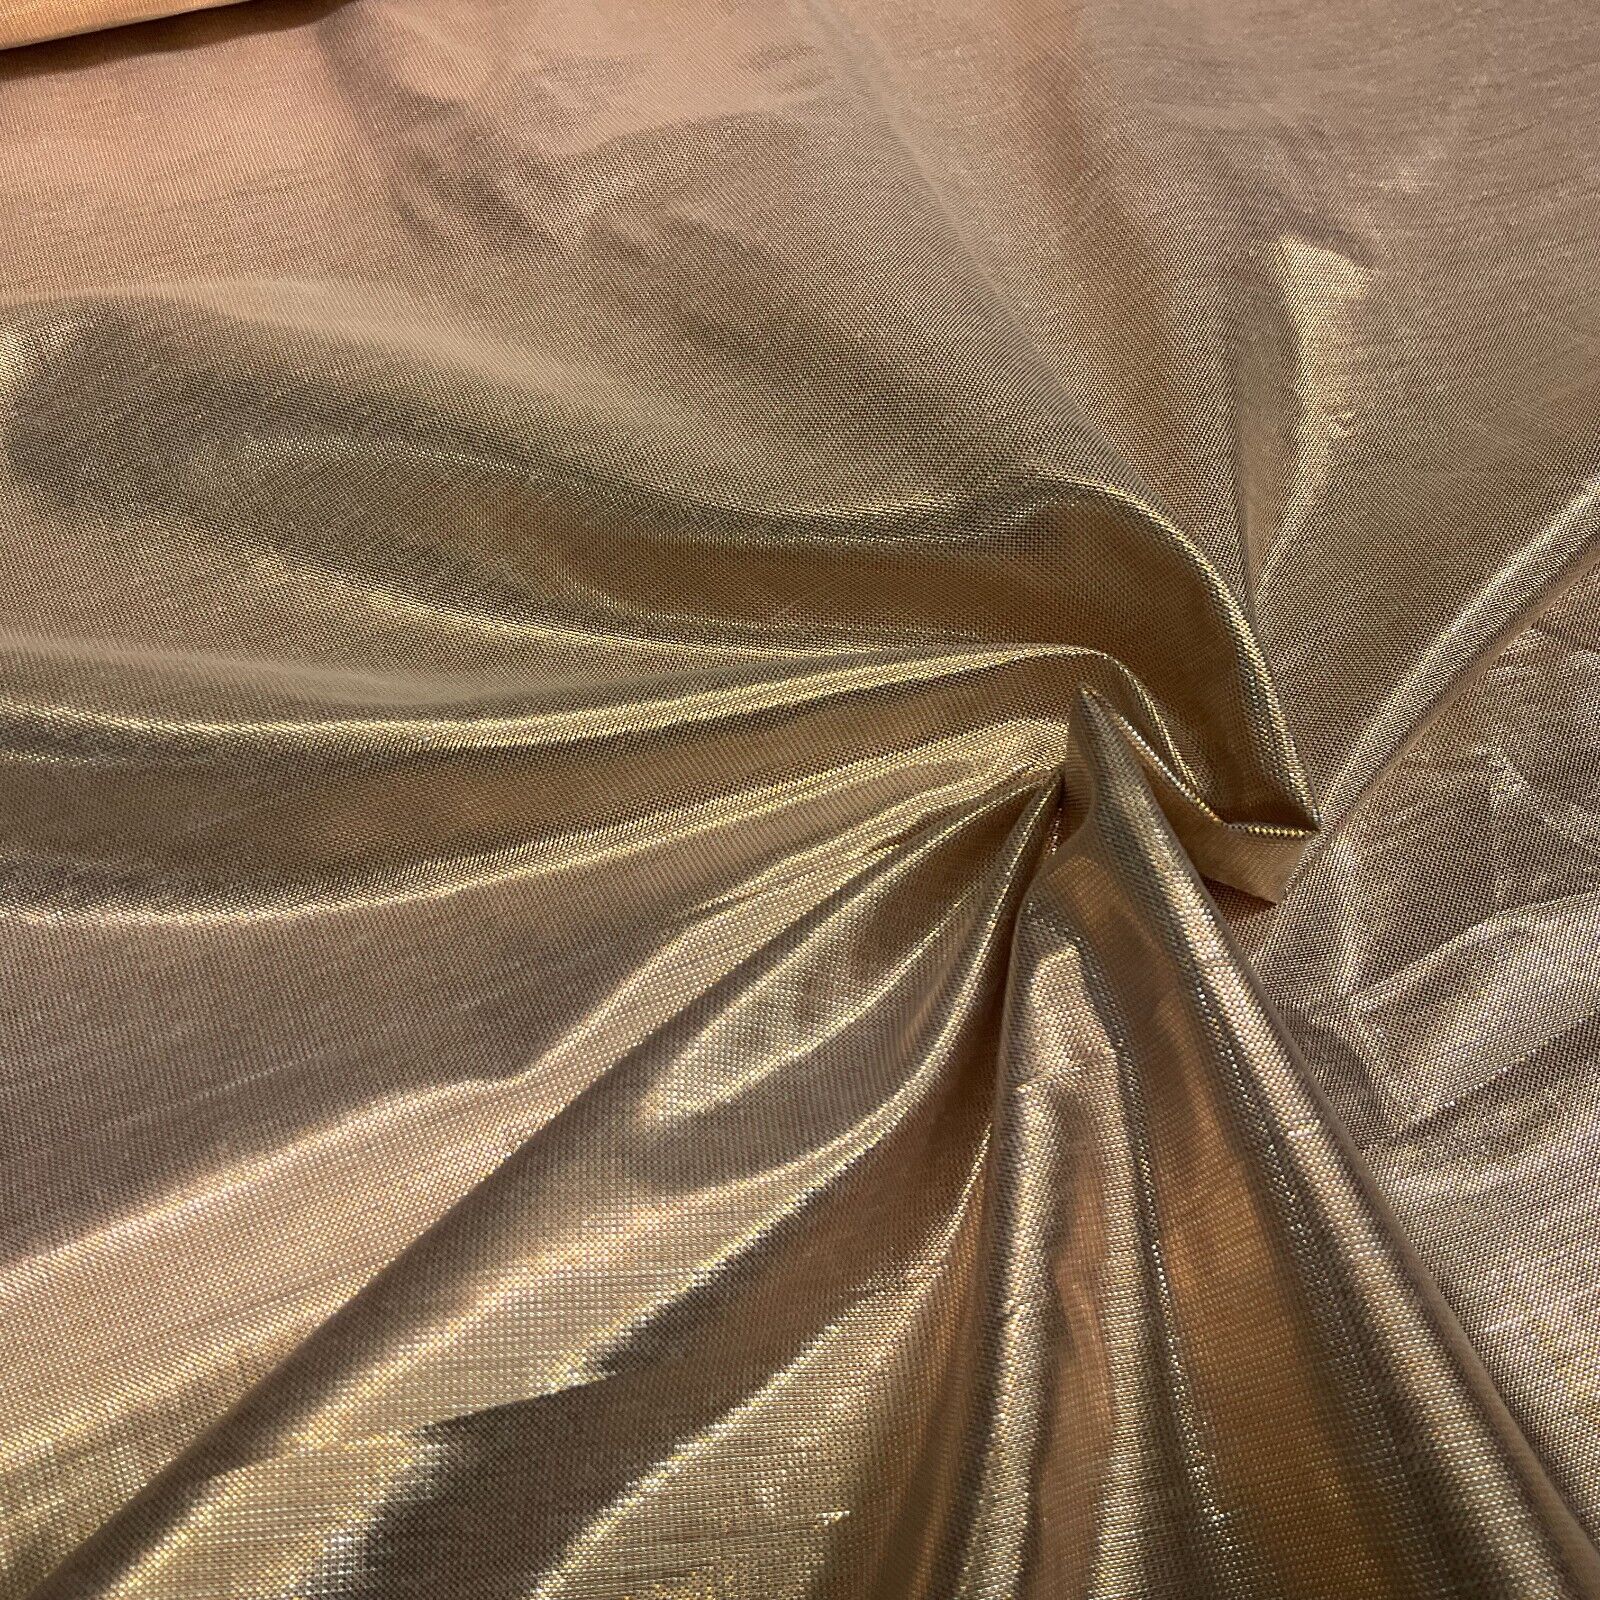 Metallic Lurex shiny foil lame fancy costume dress craft fabric M1553